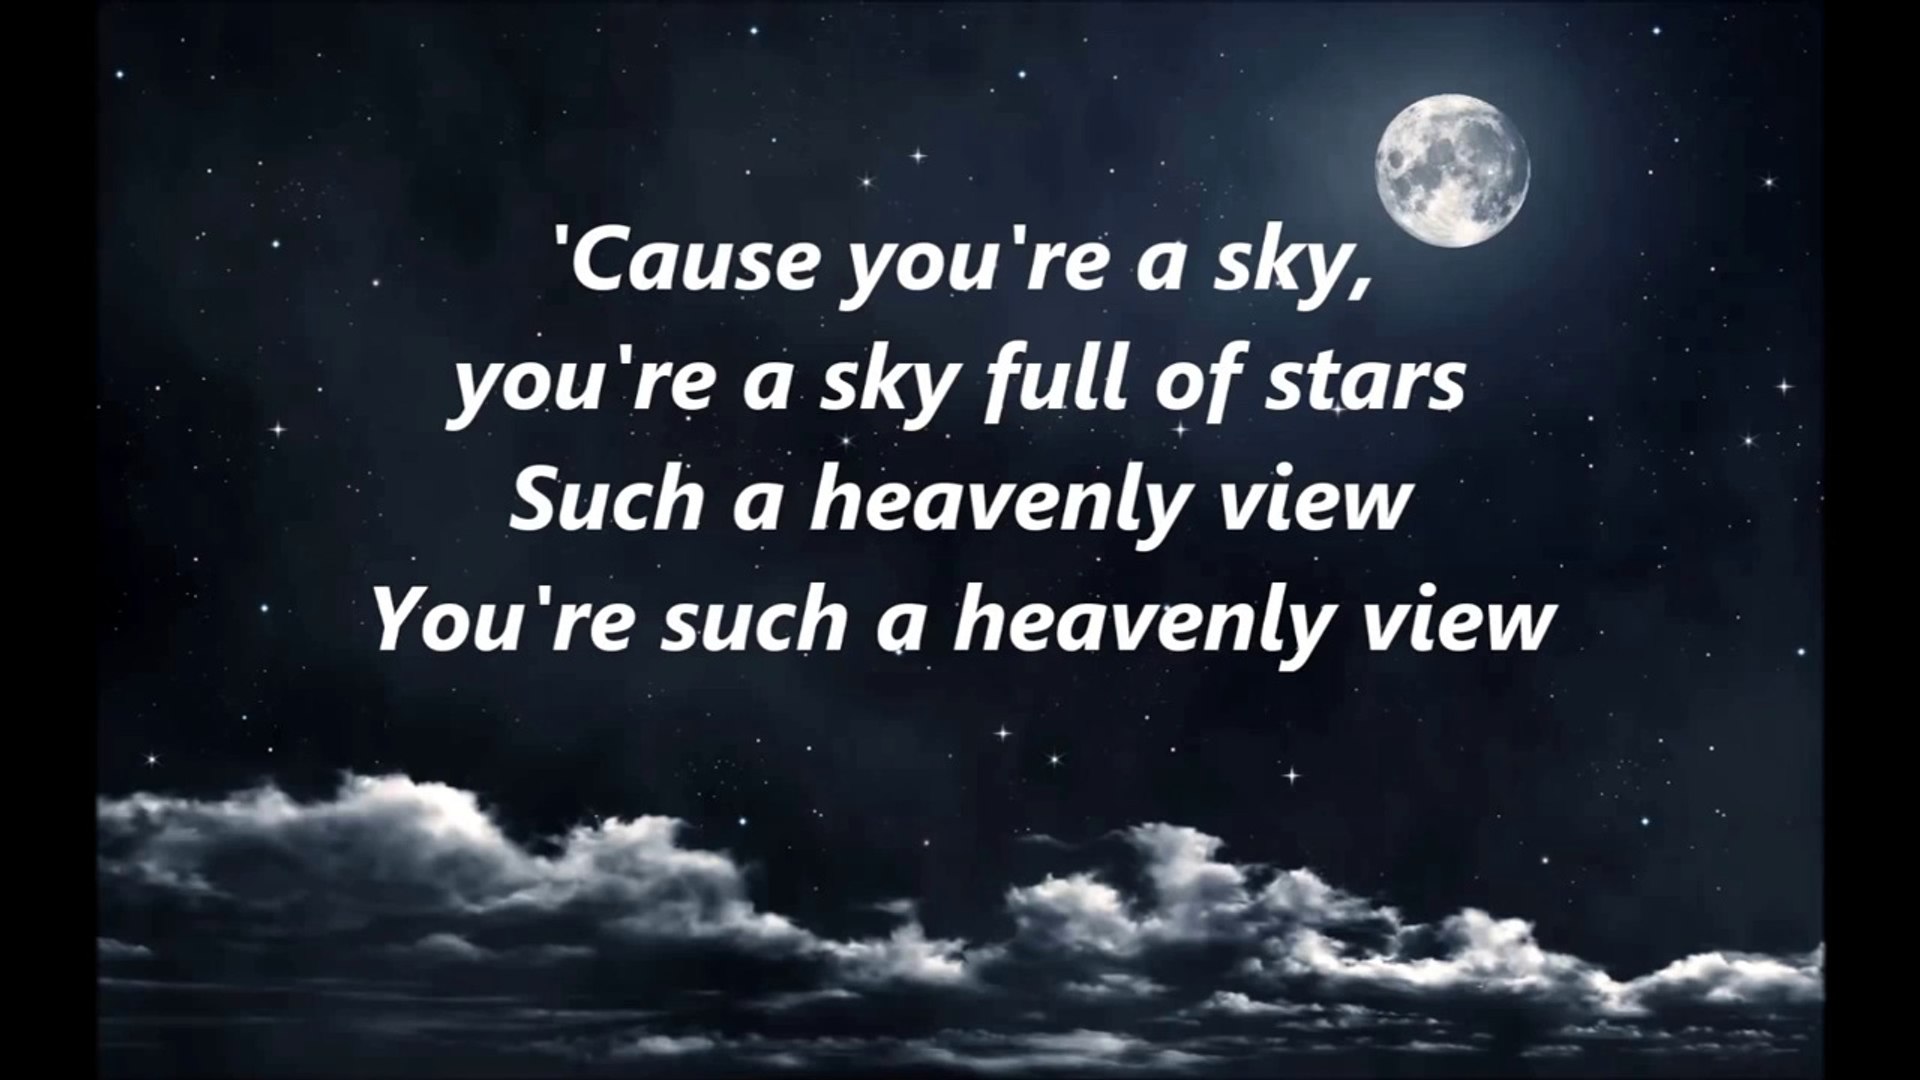 coldplay a sky full of stars lyrics - video Dailymotion